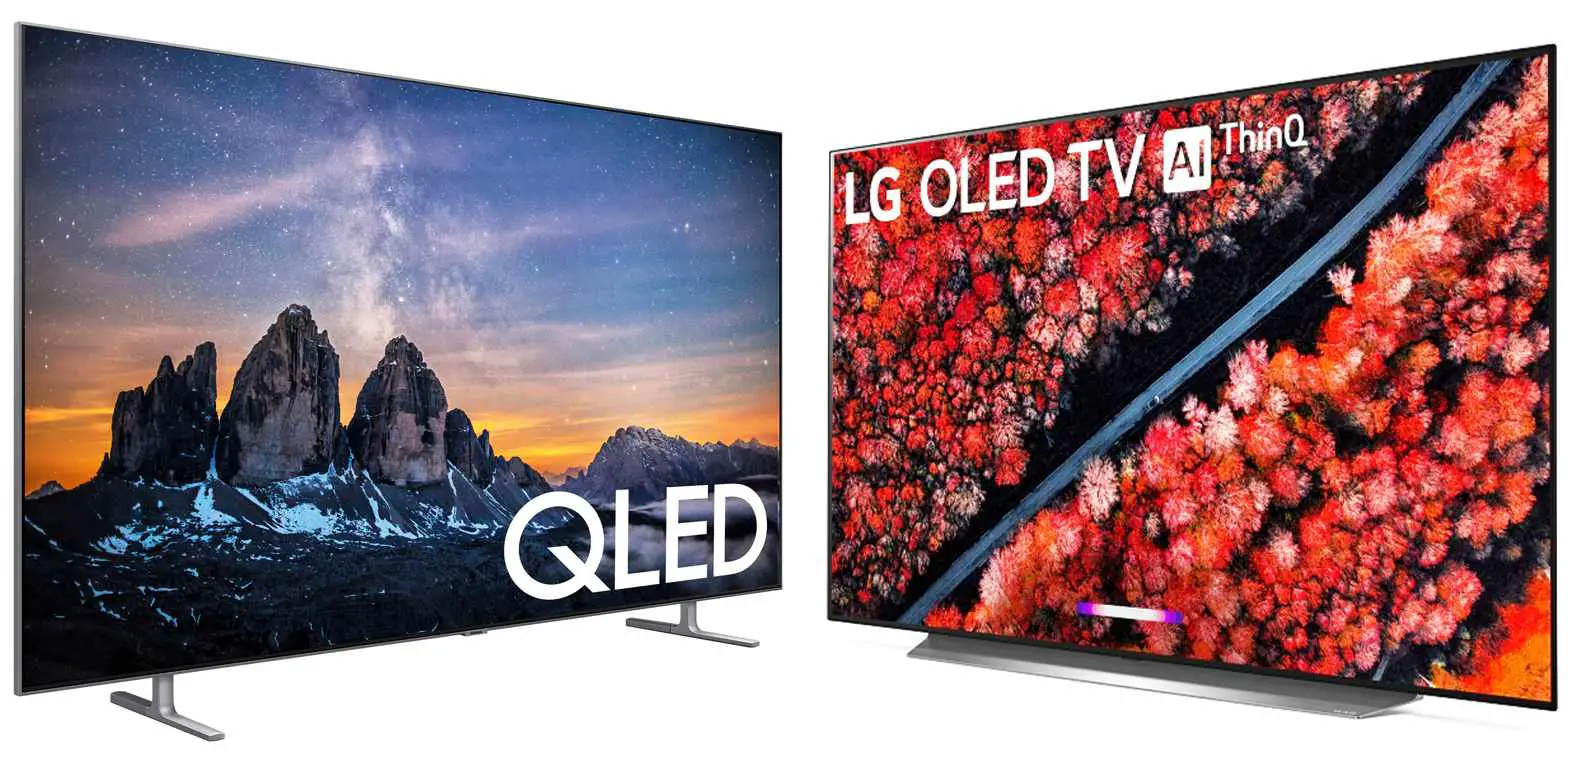 Samsung QLED TV vs LG OLED TV